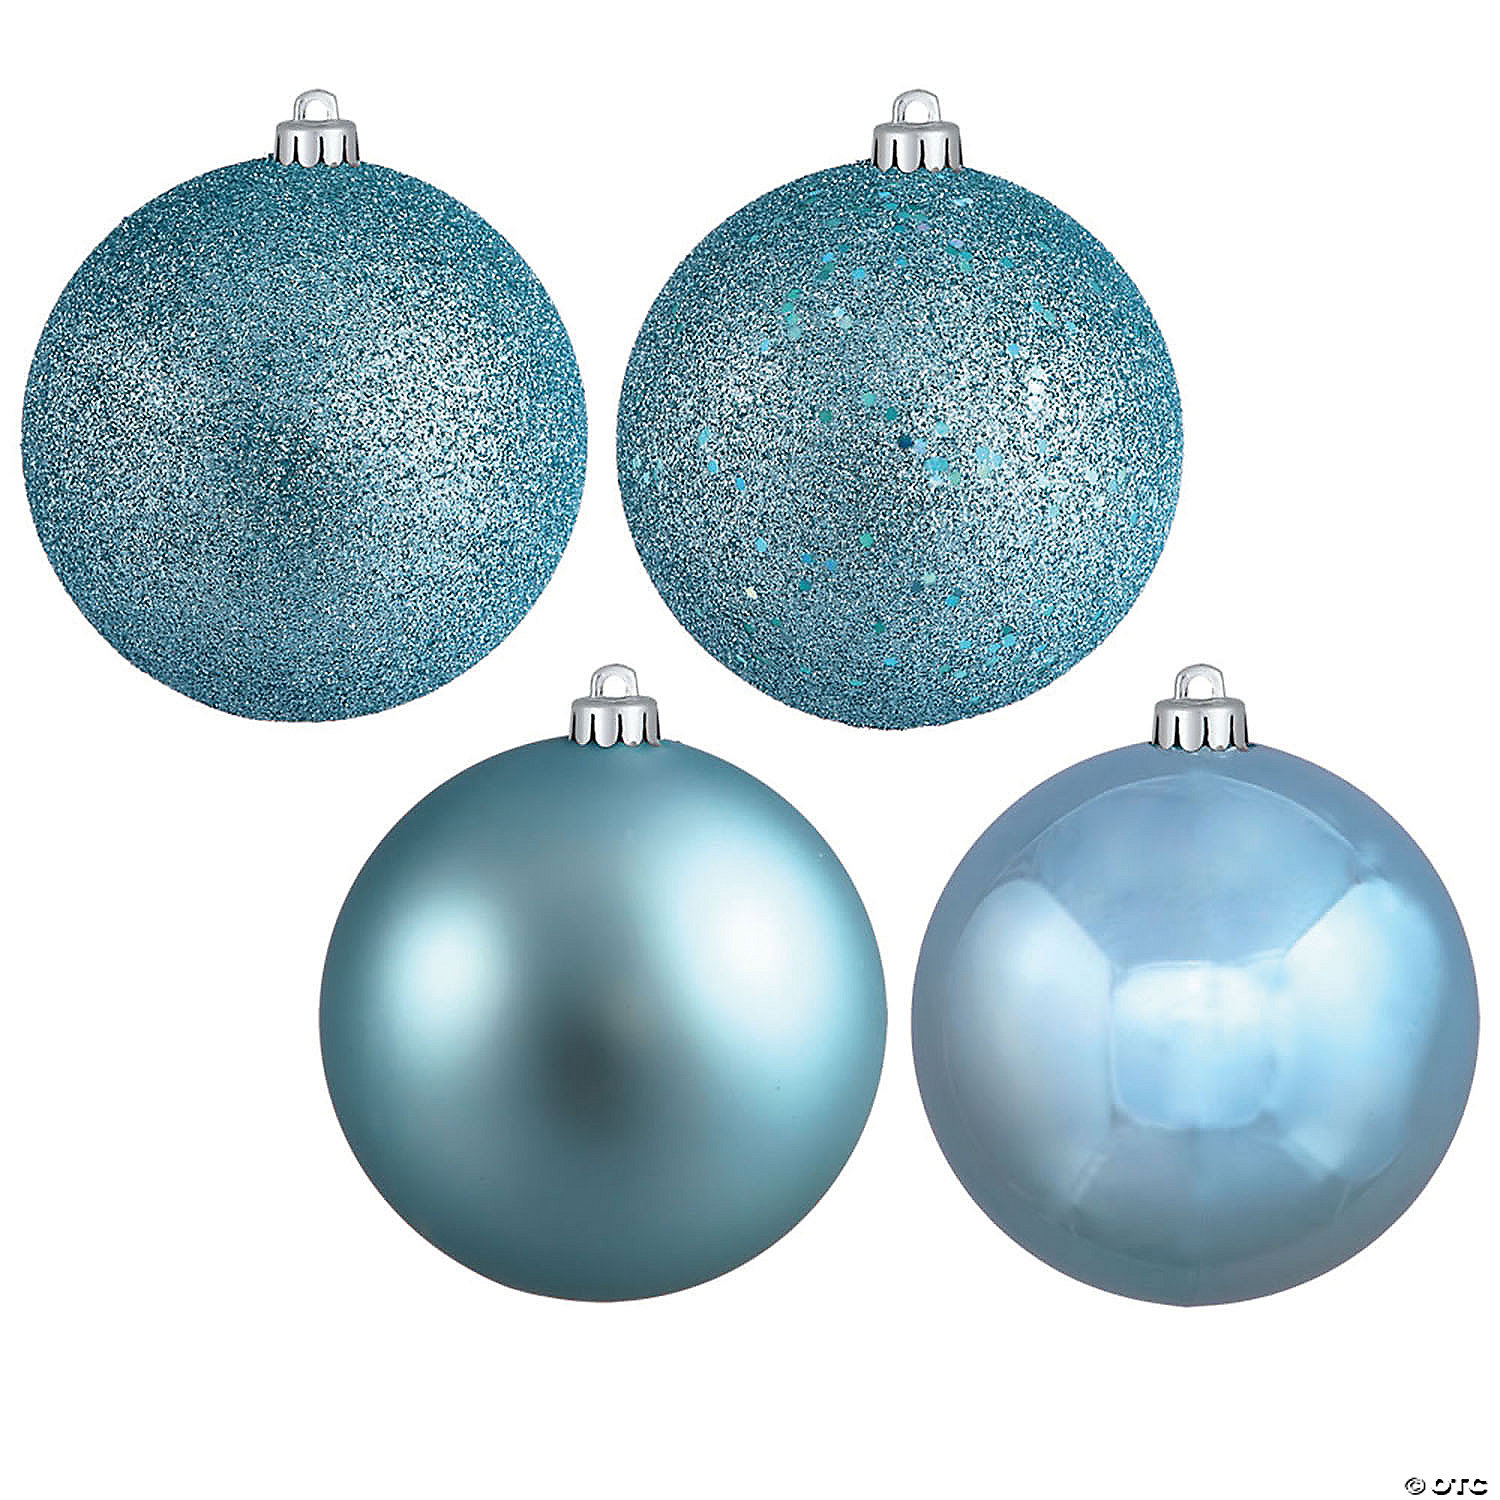 Includes 24 Ornaments per Pack. Vickerman 2.4 Teal Glitter Ball Ornament 